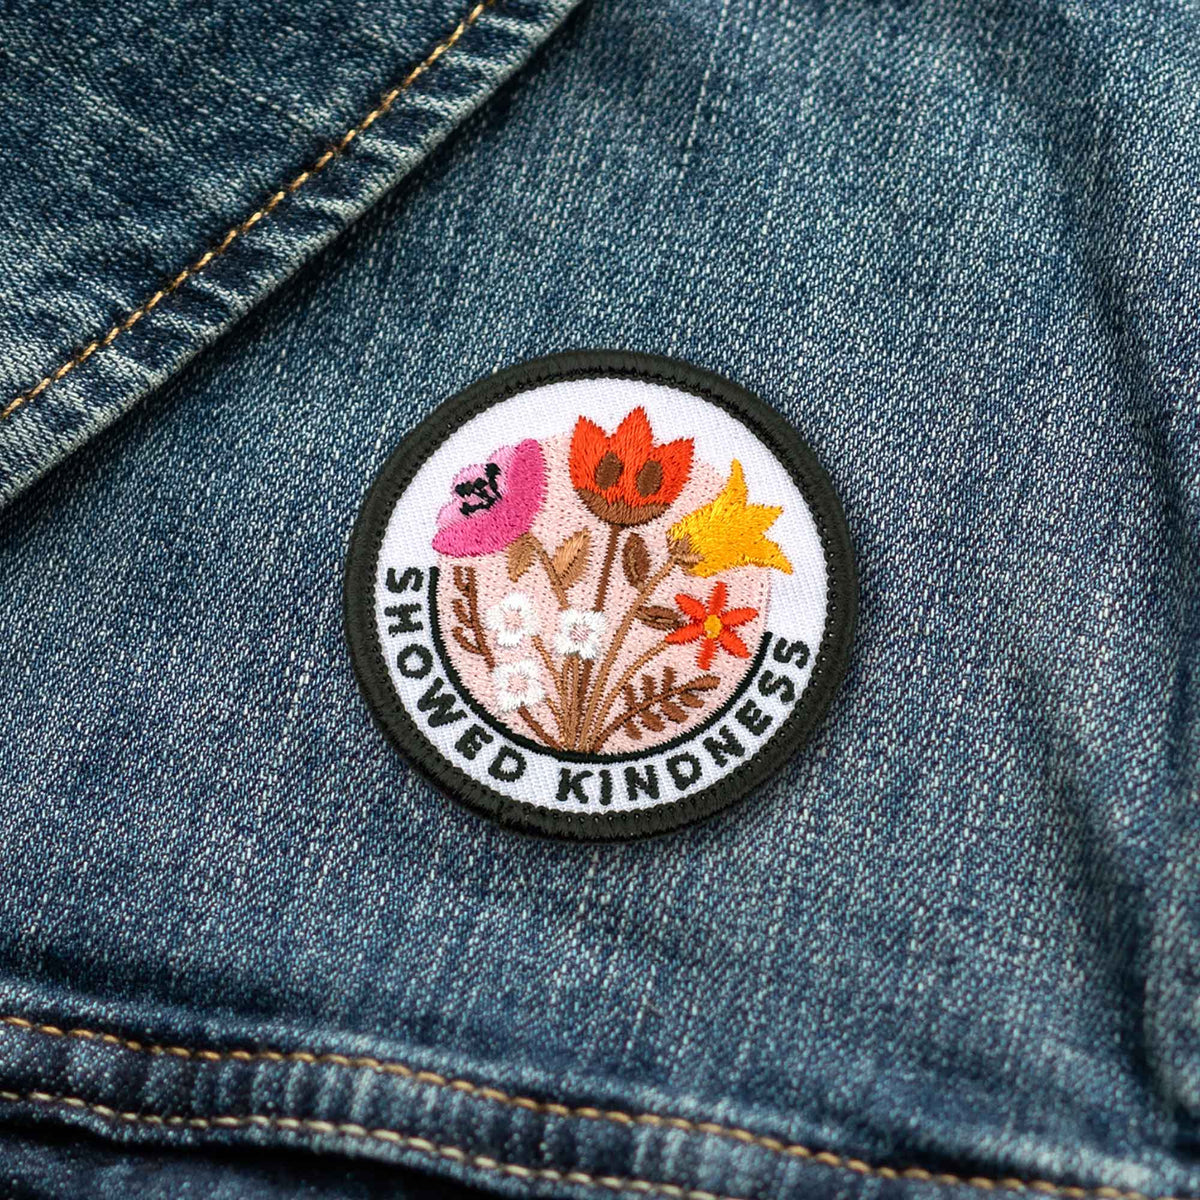 Showed Kindness adulting merit badge patch for adults on denim jacket